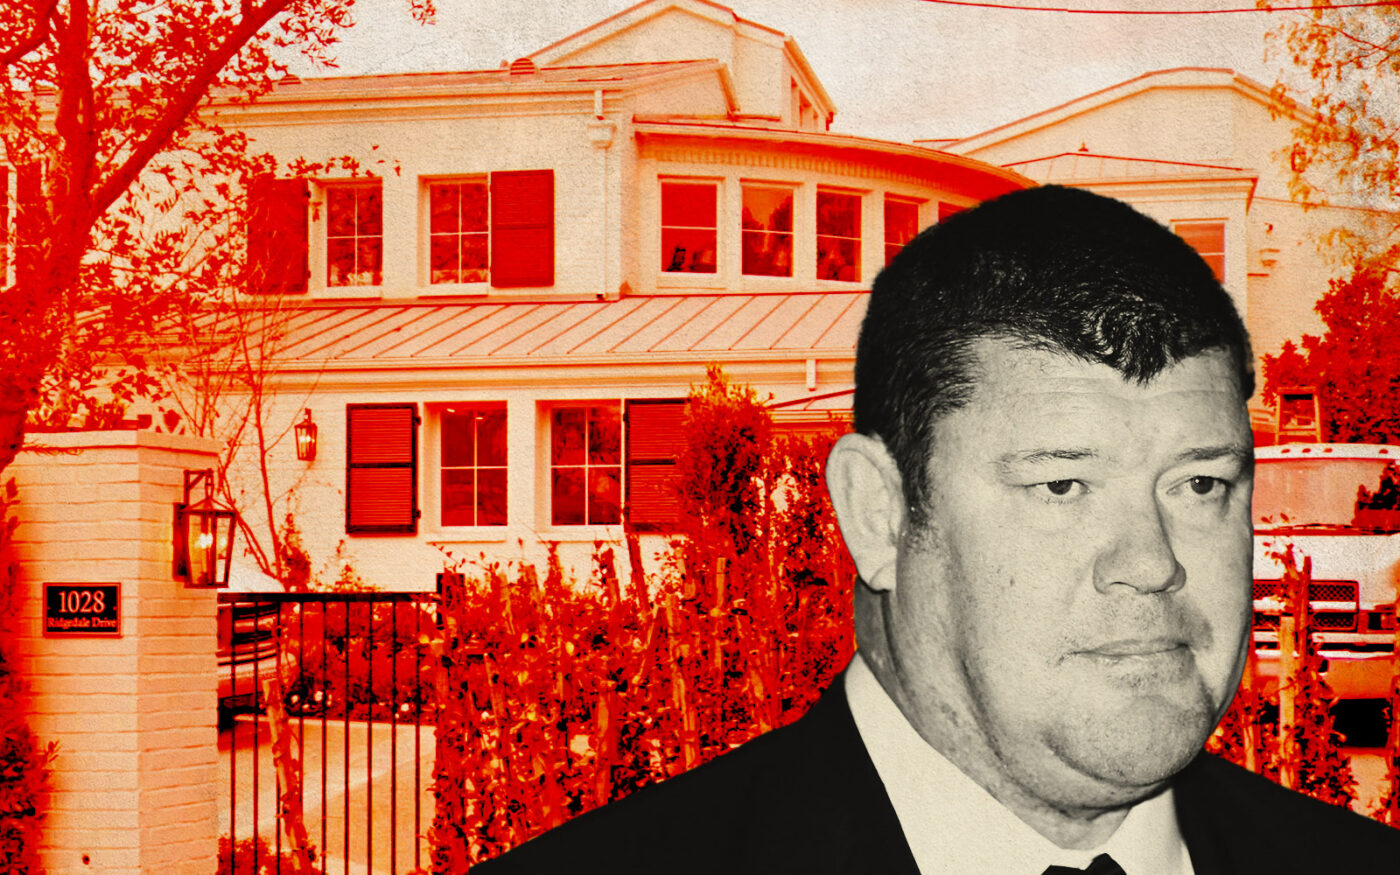 Billionaire James Packer Lists Beverly Hills House for $85M